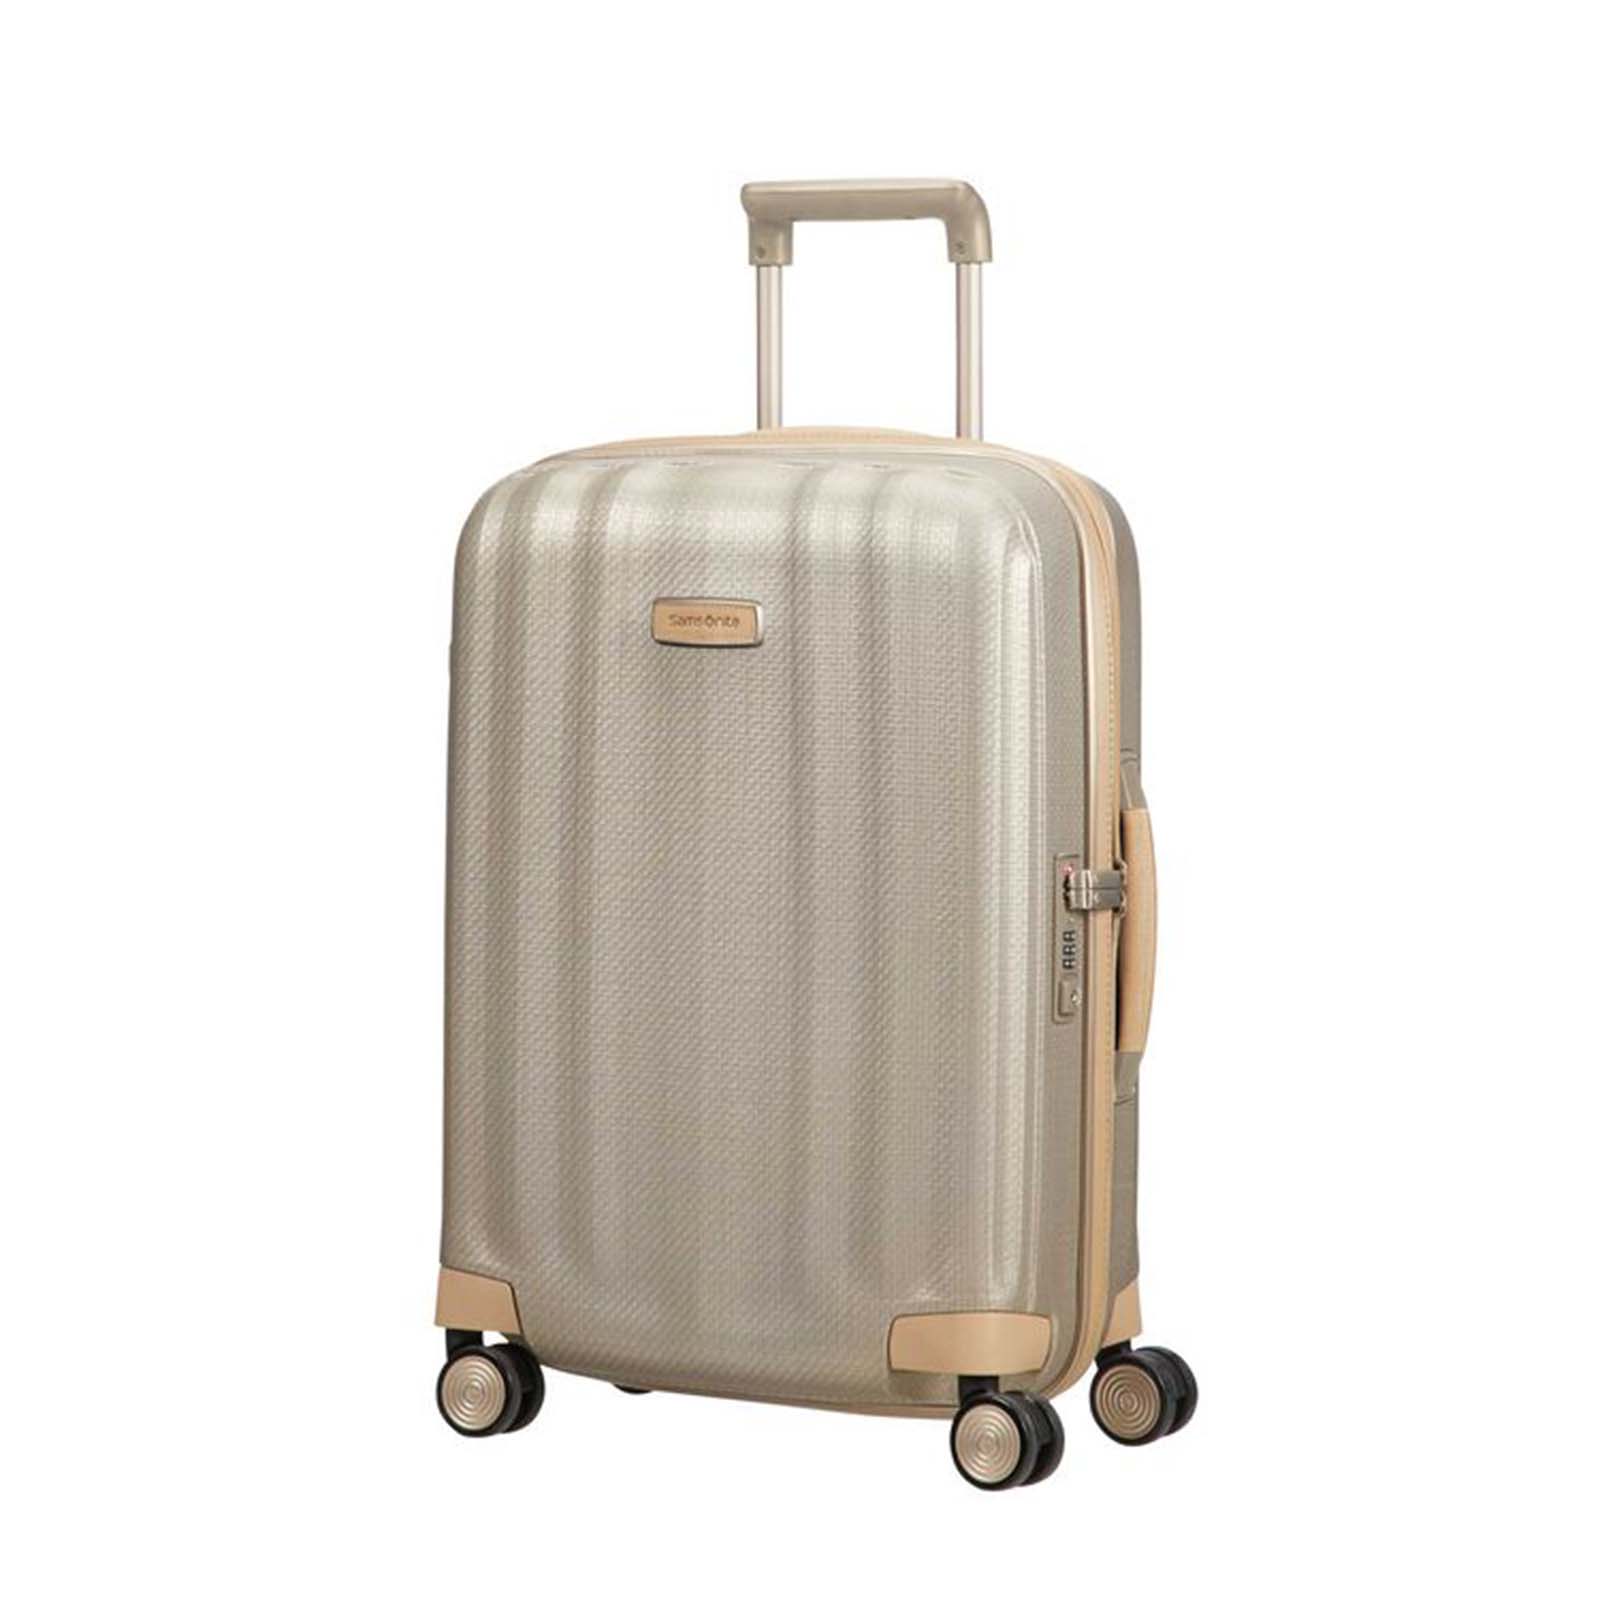 Samsonite-Lite-Cube-Prime-55cm-Suitcase-Ivory-Gold-Front-Angle